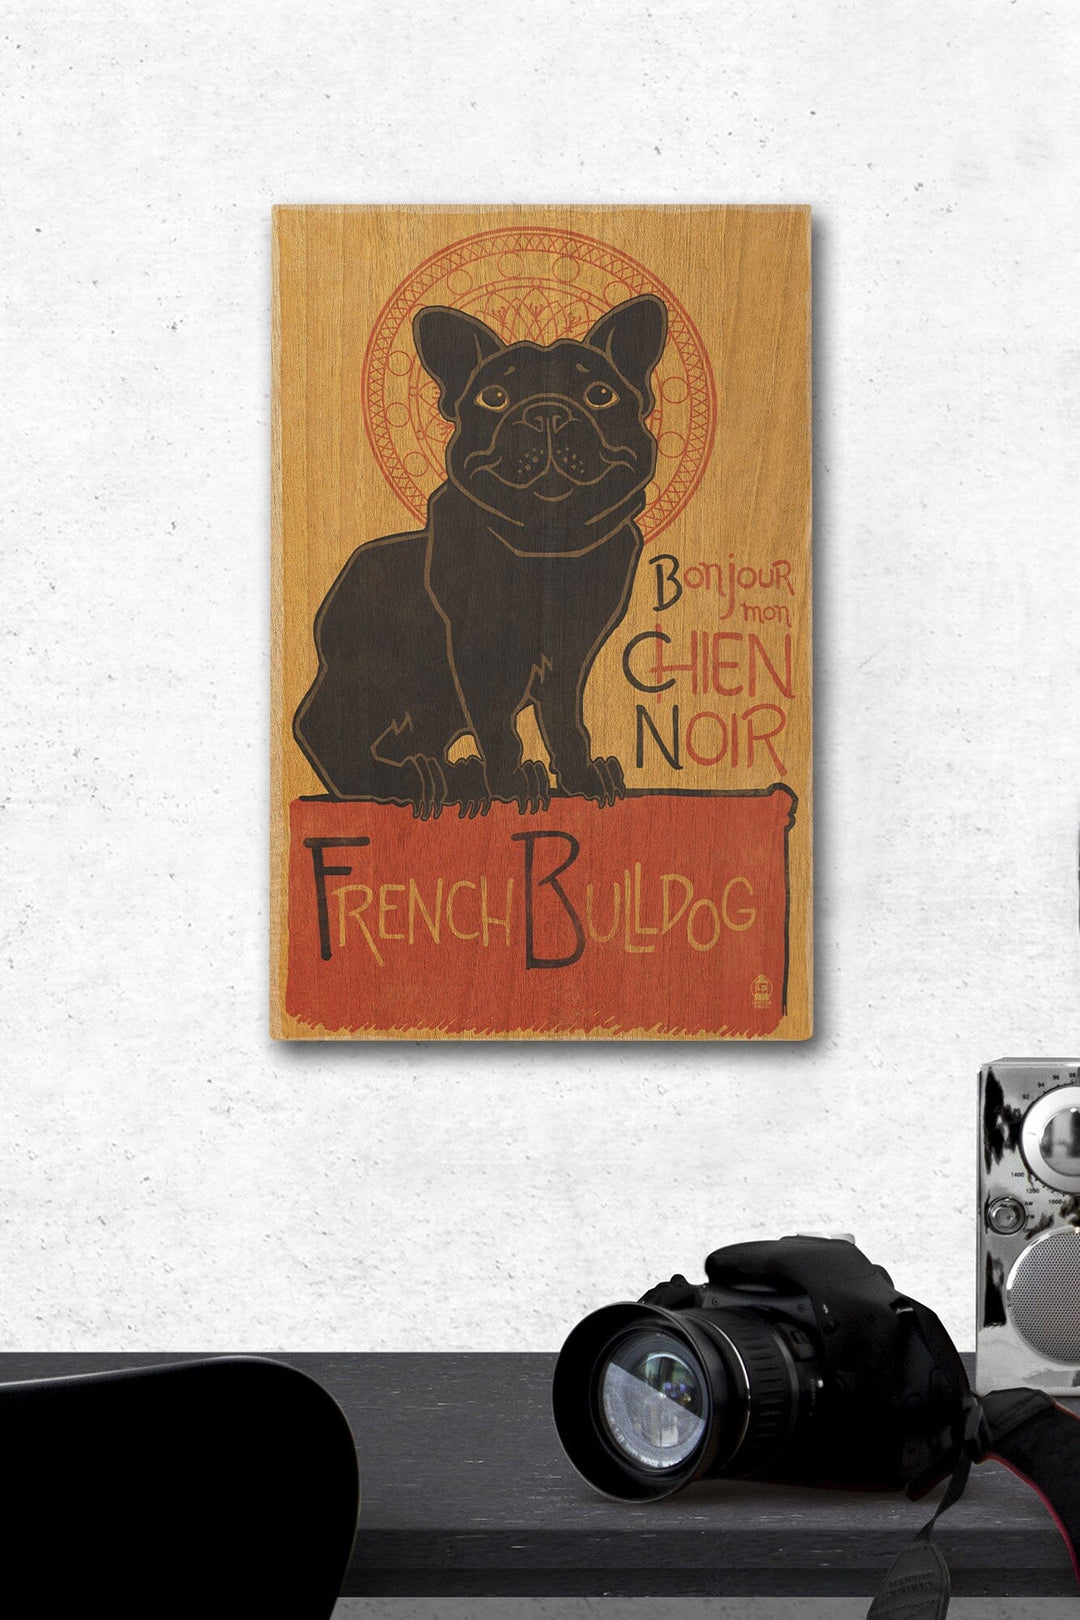 French Bulldog, Retro Chien Noir Ad, Lantern Press Artwork, Wood Signs and Postcards Wood Lantern Press 12 x 18 Wood Gallery Print 